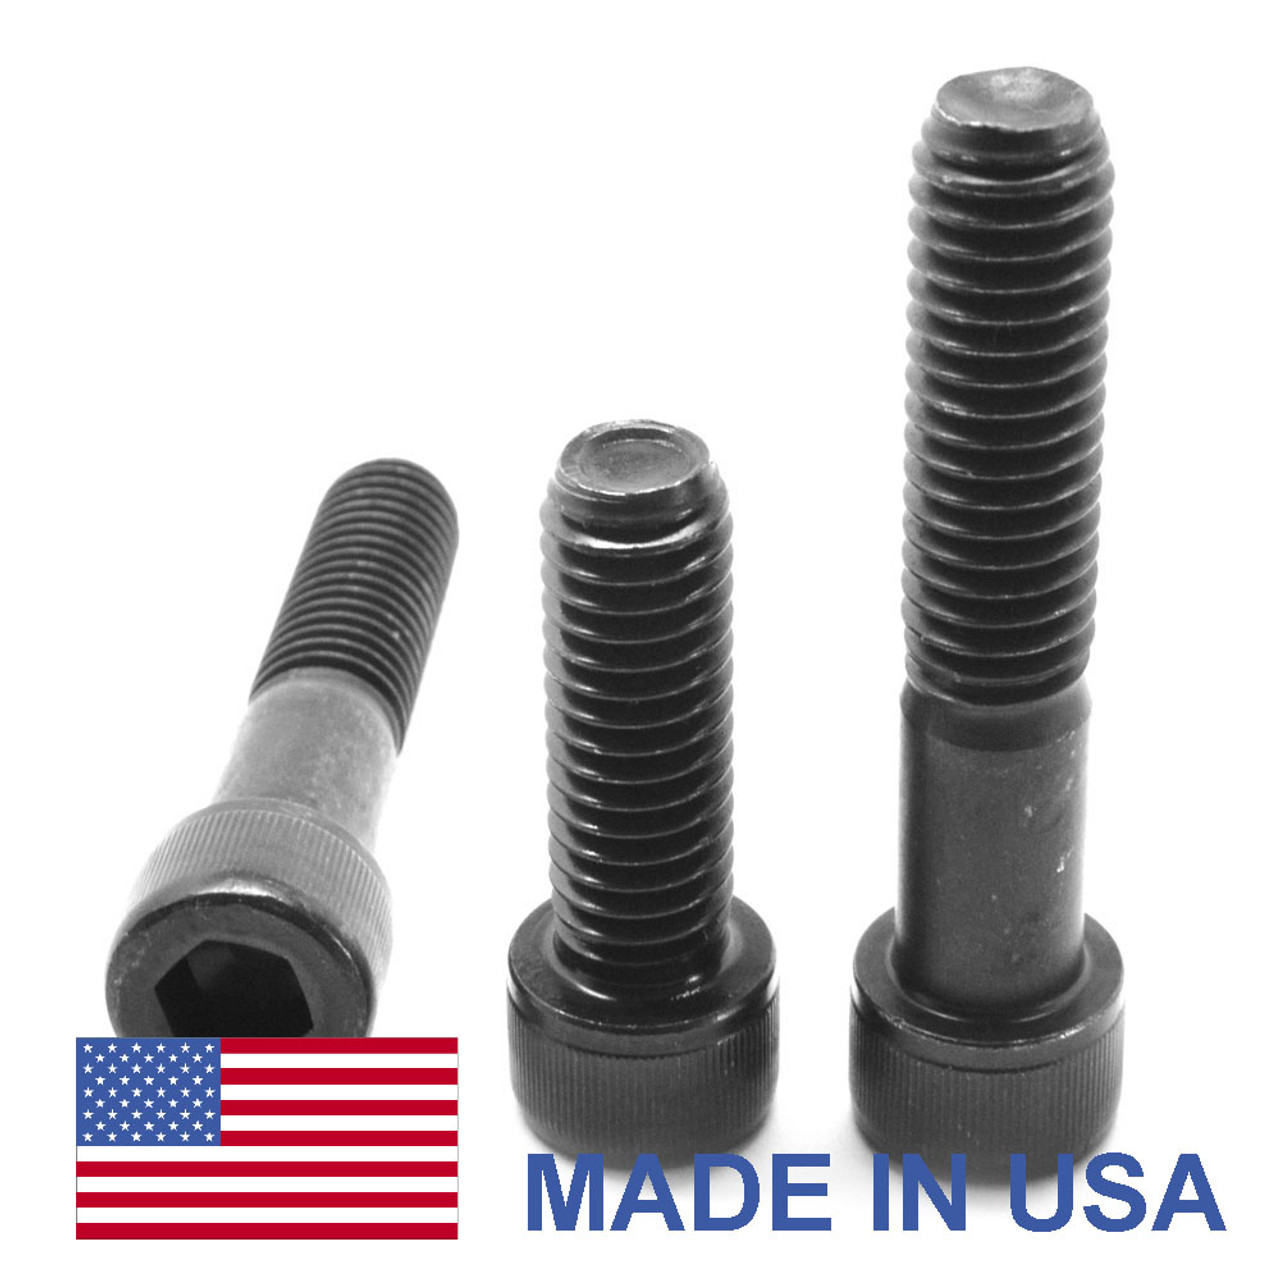 5/16-18 x 3 Coarse Thread Socket Head Cap Screw - USA Alloy Steel Black Oxide